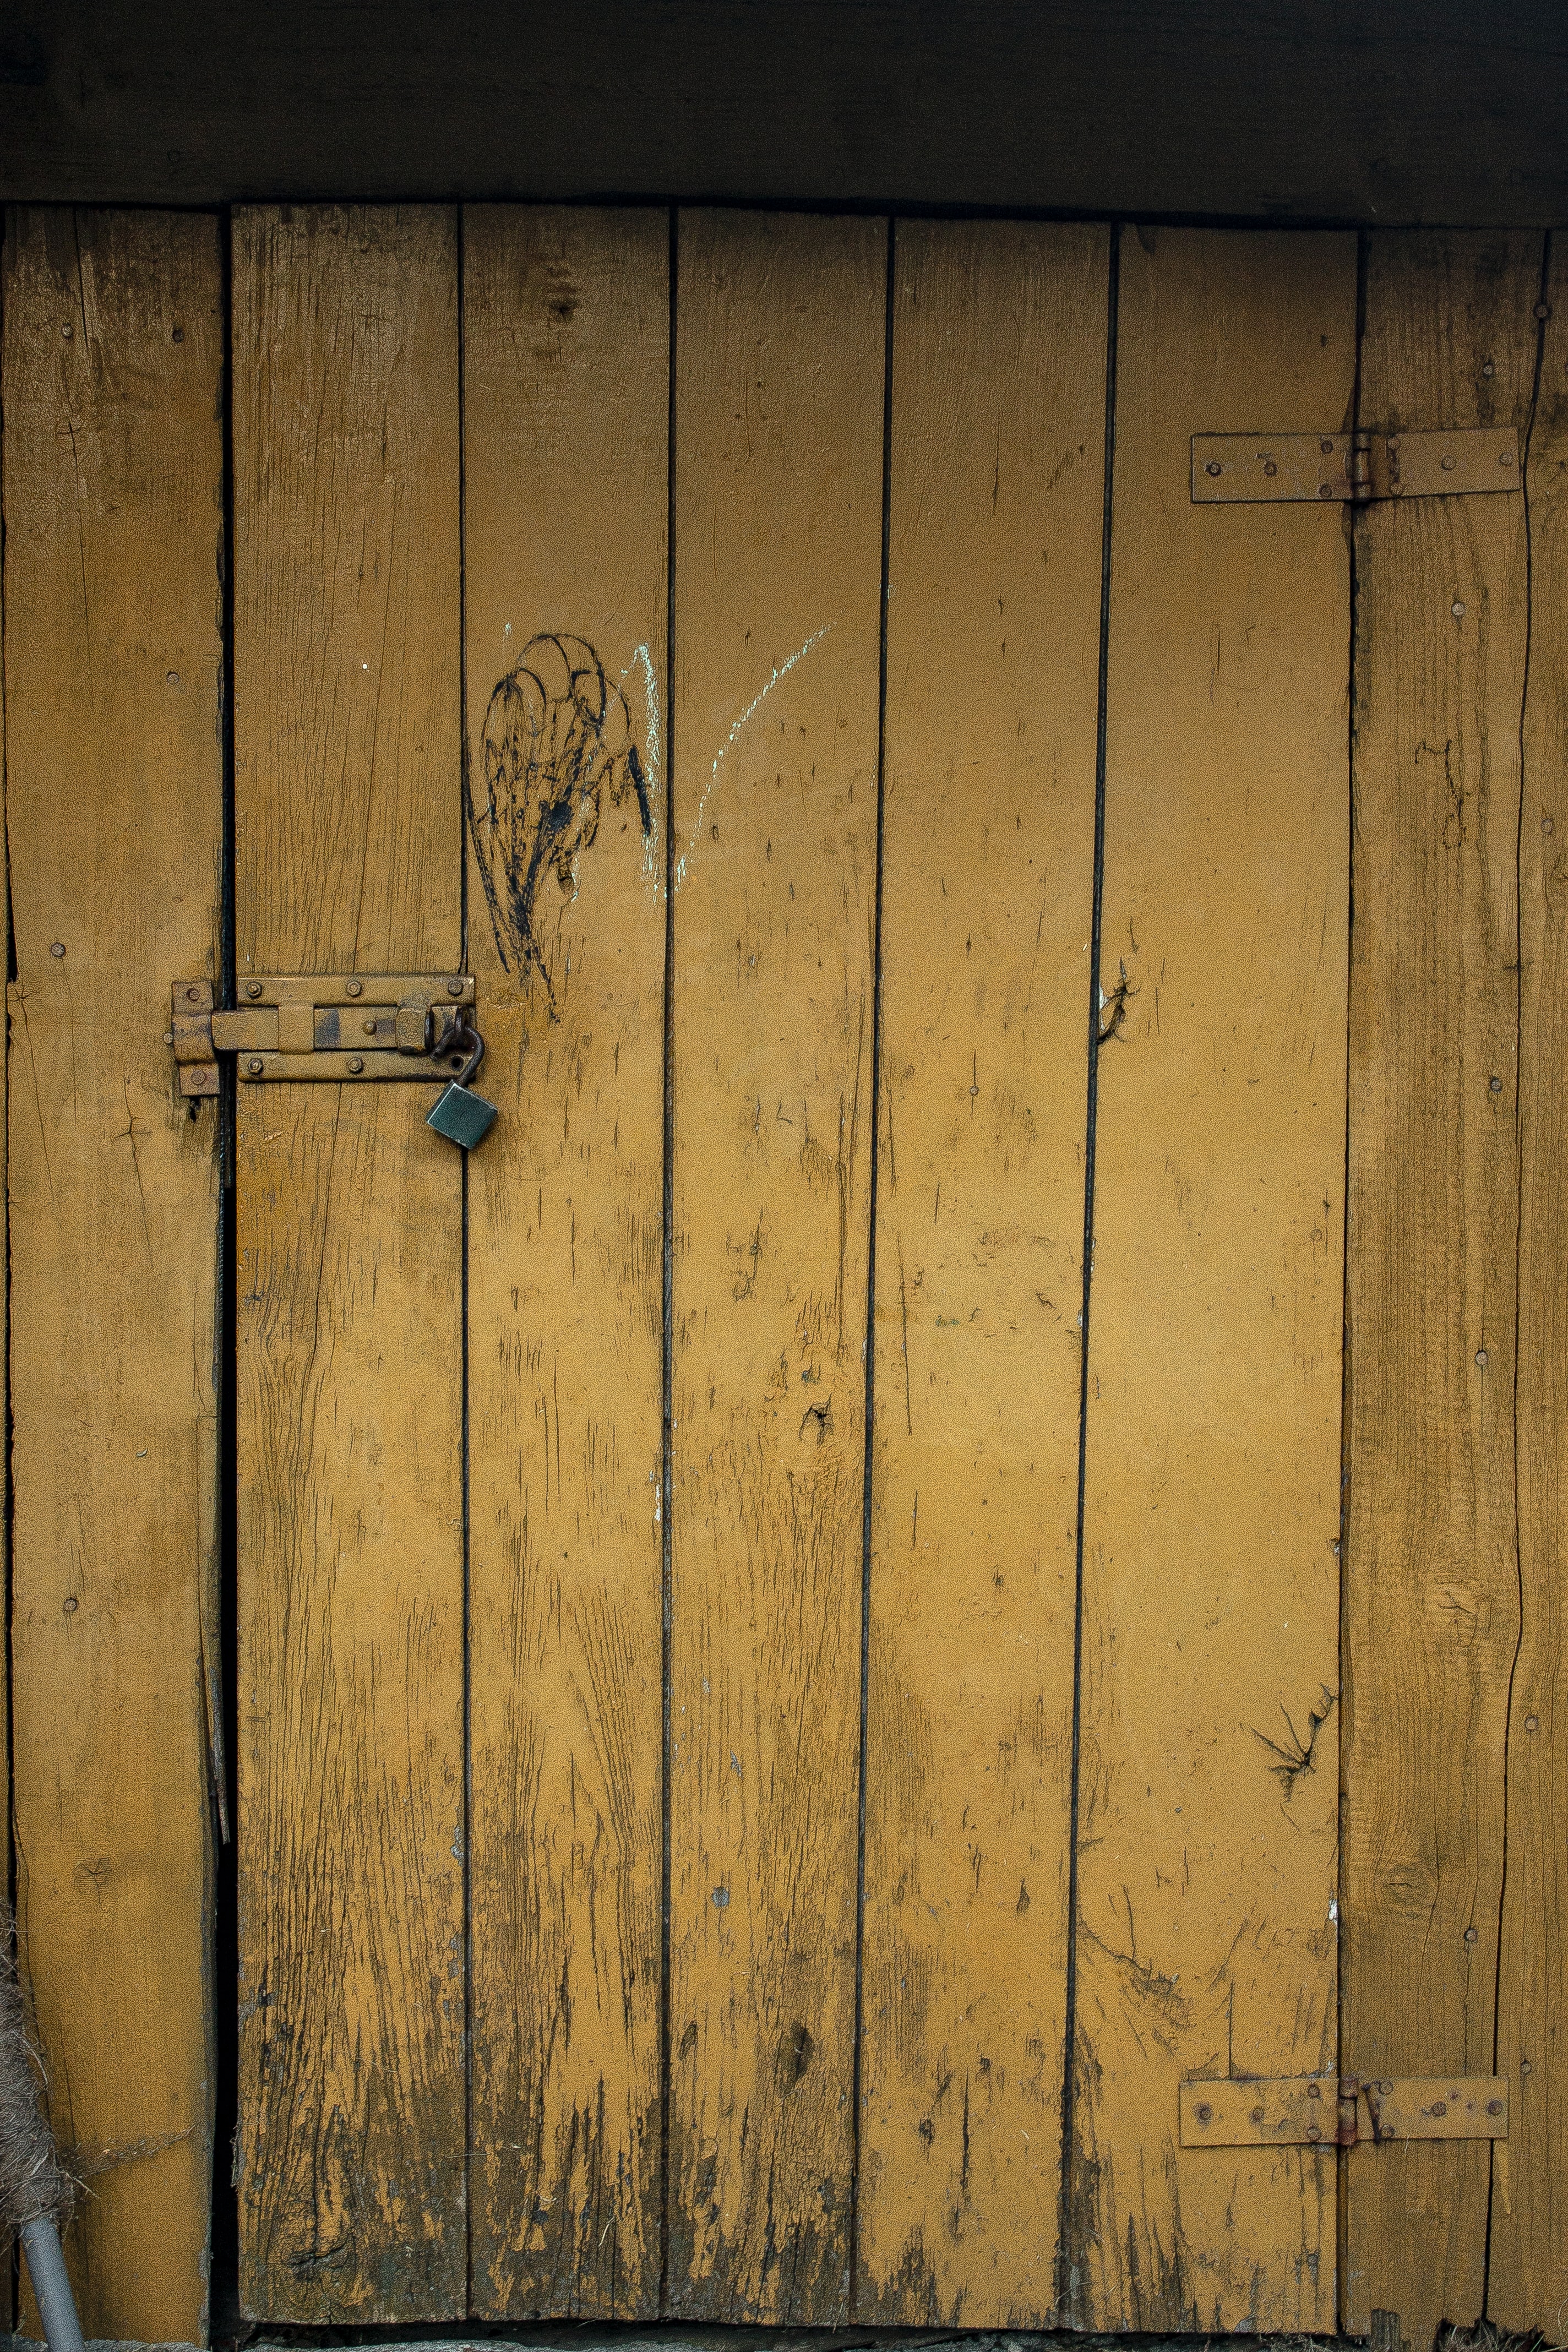 A photograph of a brown wooden panel door